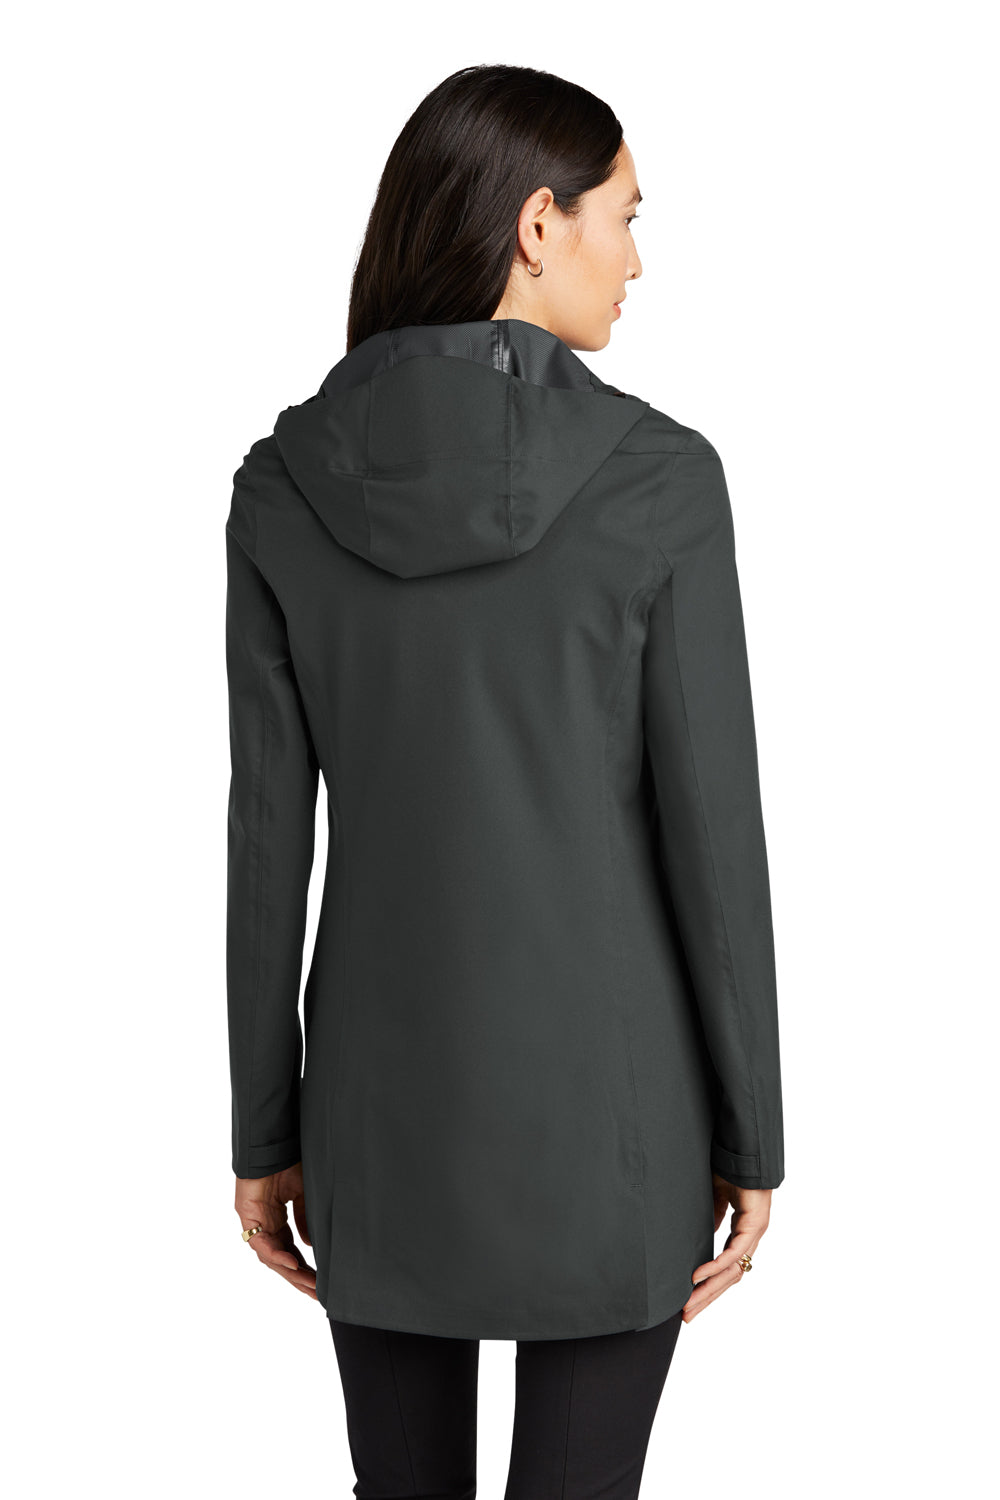 Mercer+Mettle MM7001 Waterproof Full Zip Hooded Rain Jacket Anchor Grey Back